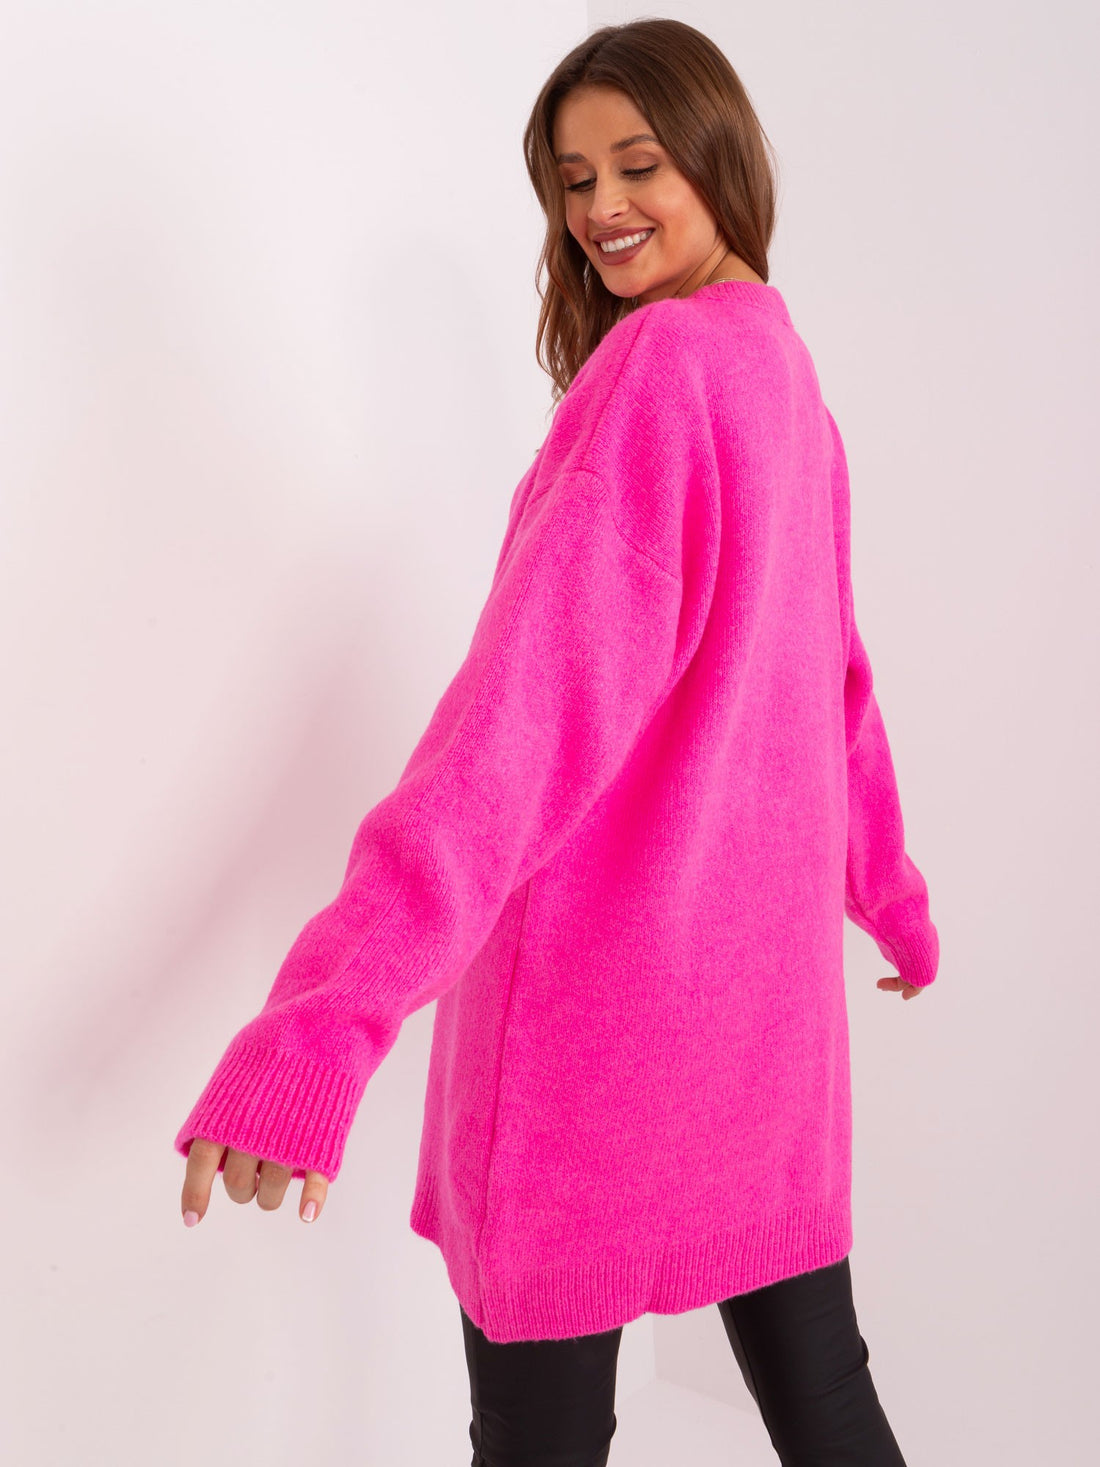 Sweater Dress Mini Hot Pink